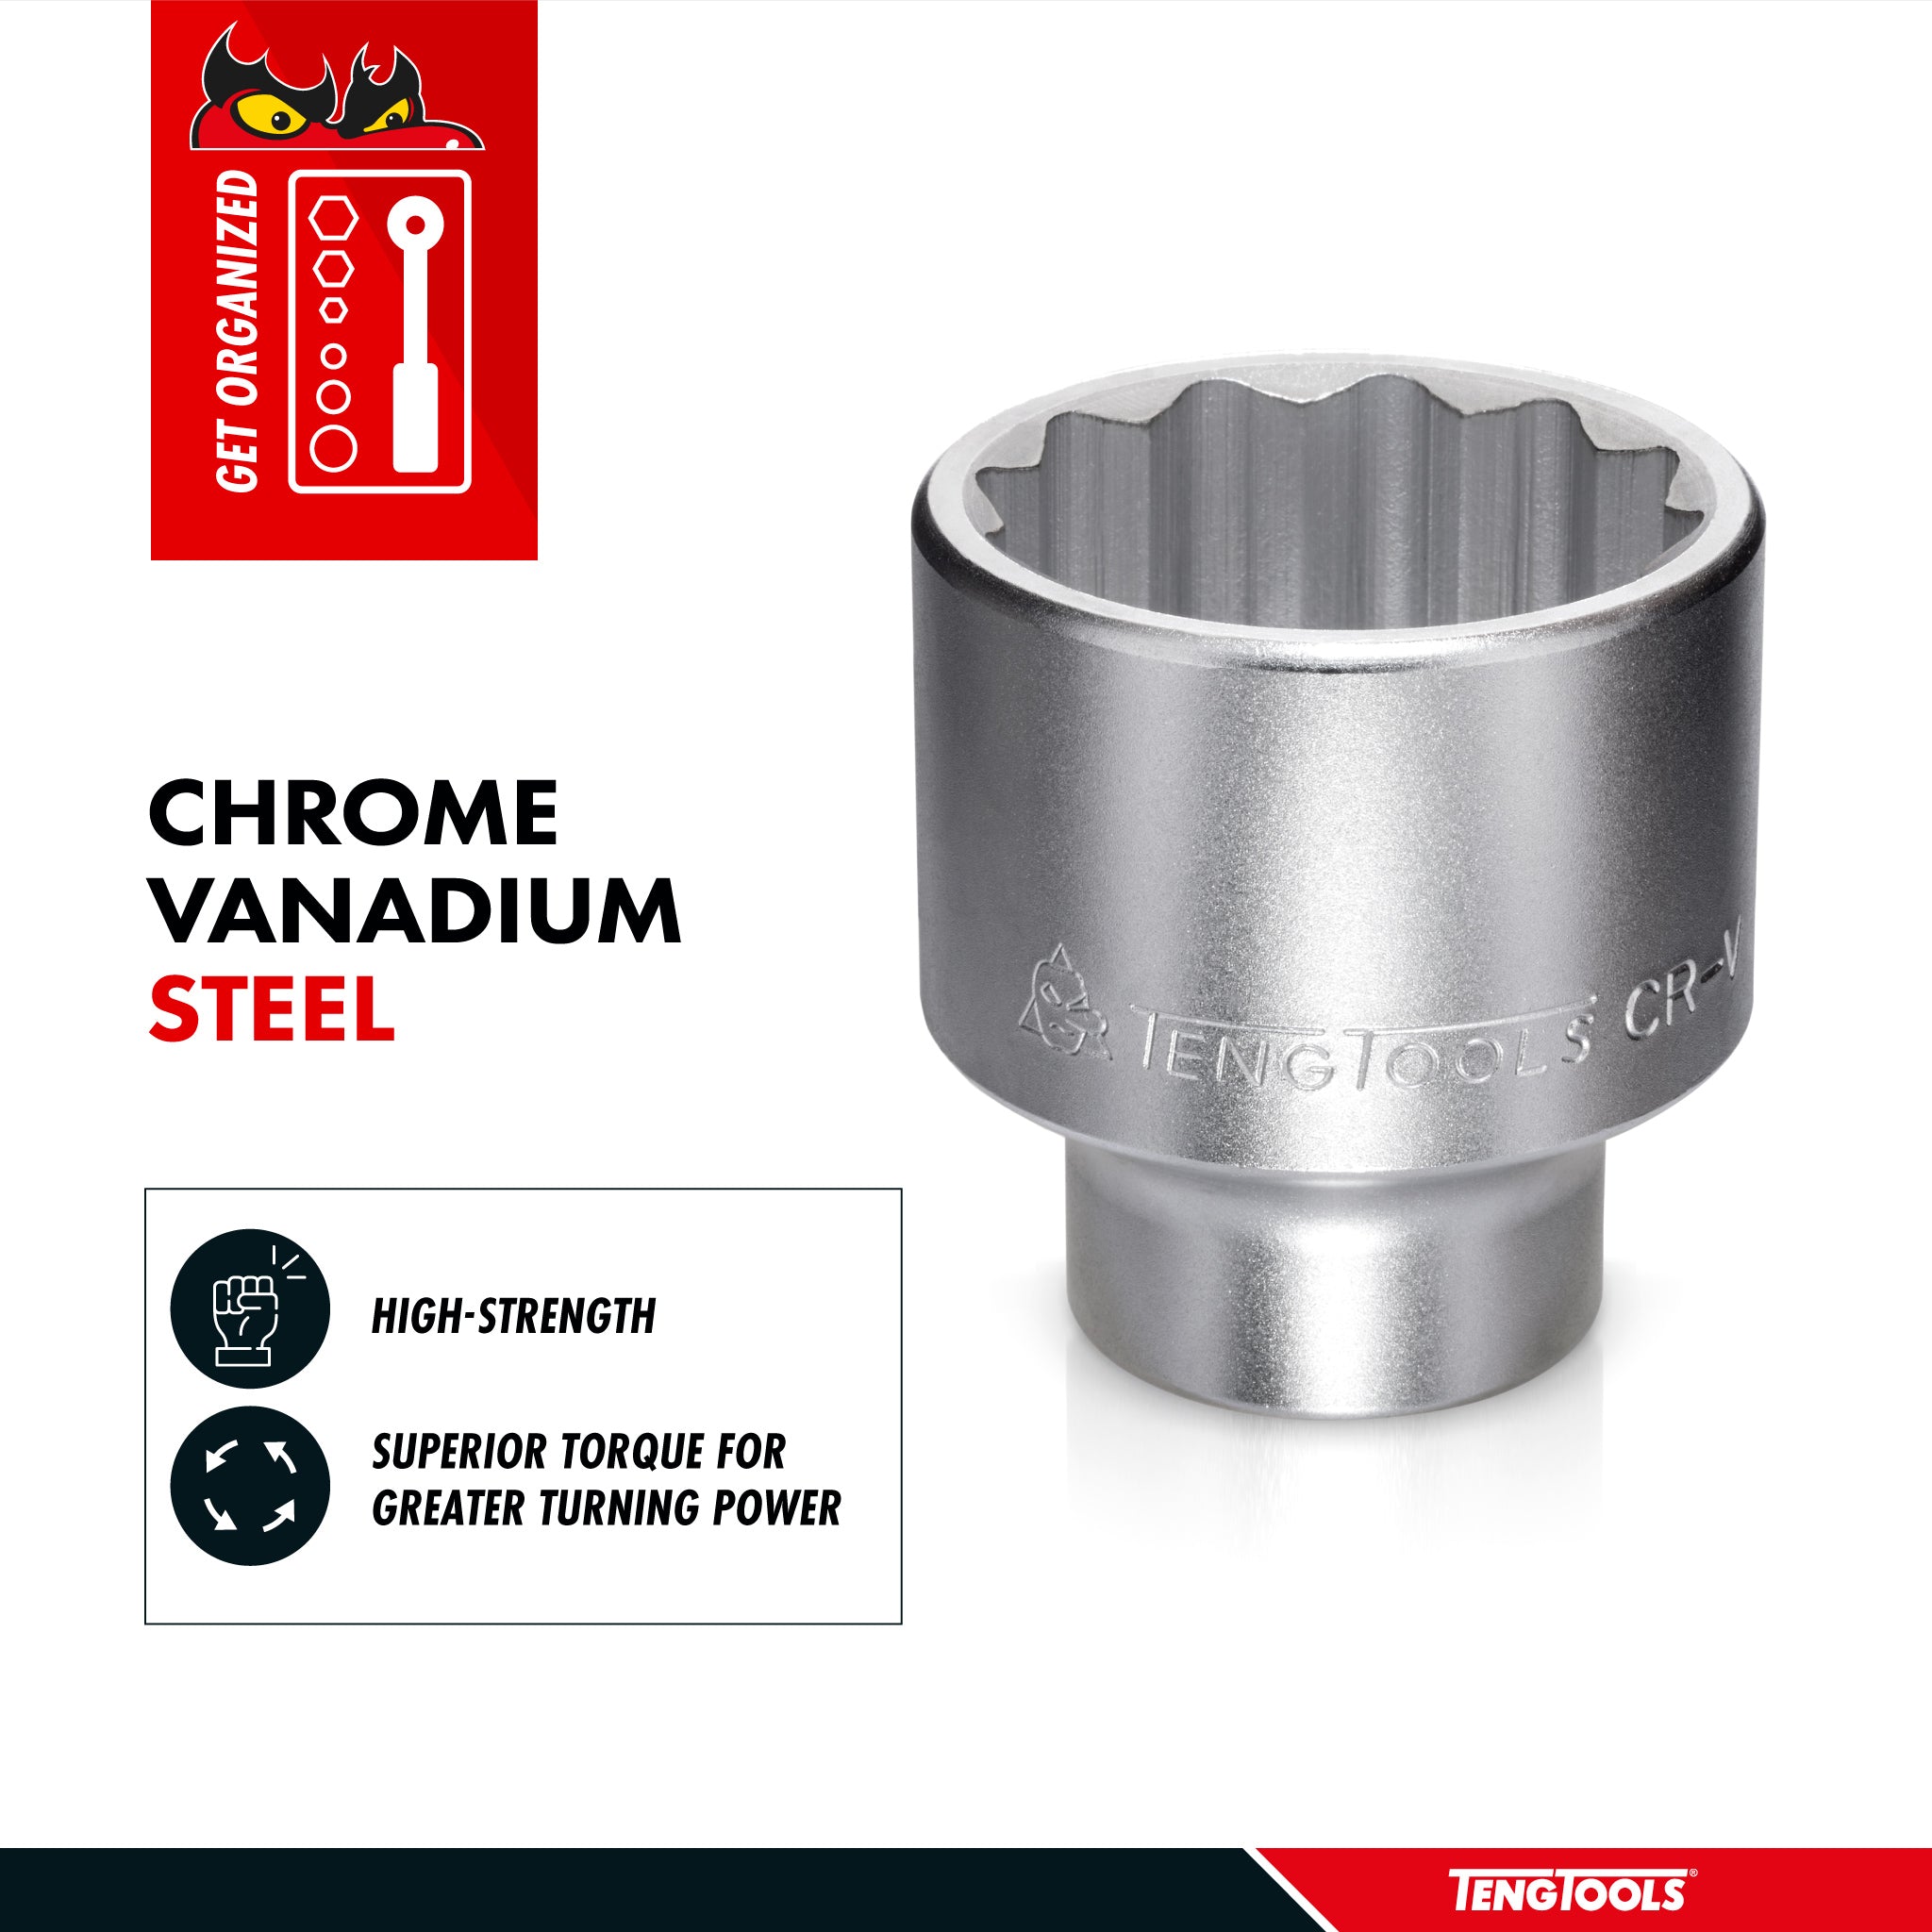 Teng Tools 2 Inch 12 Point SAE Shallow 3/4 Inch Drive Chrome Vanadium Socket | Mechanic Tool | Hand Tool - M340164-C